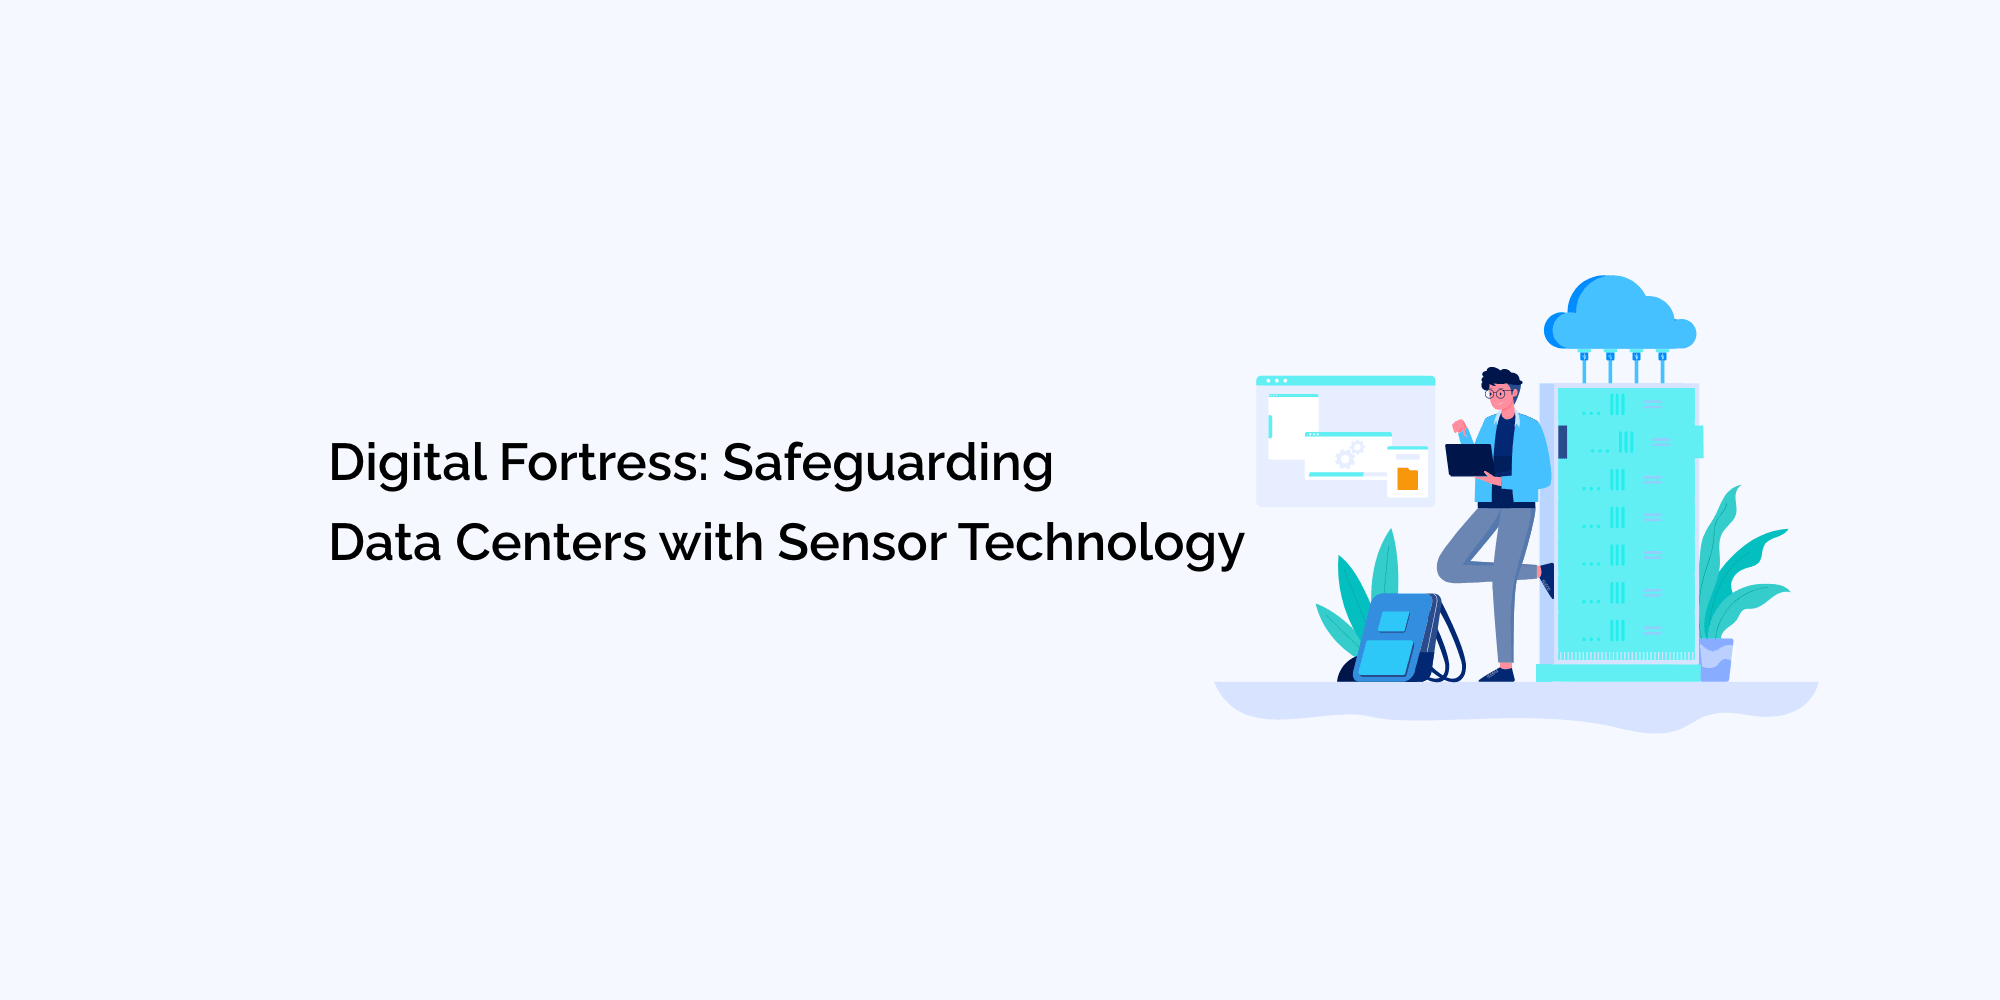 Digital Fortress: Safeguarding Data Centers with Sensor Technology